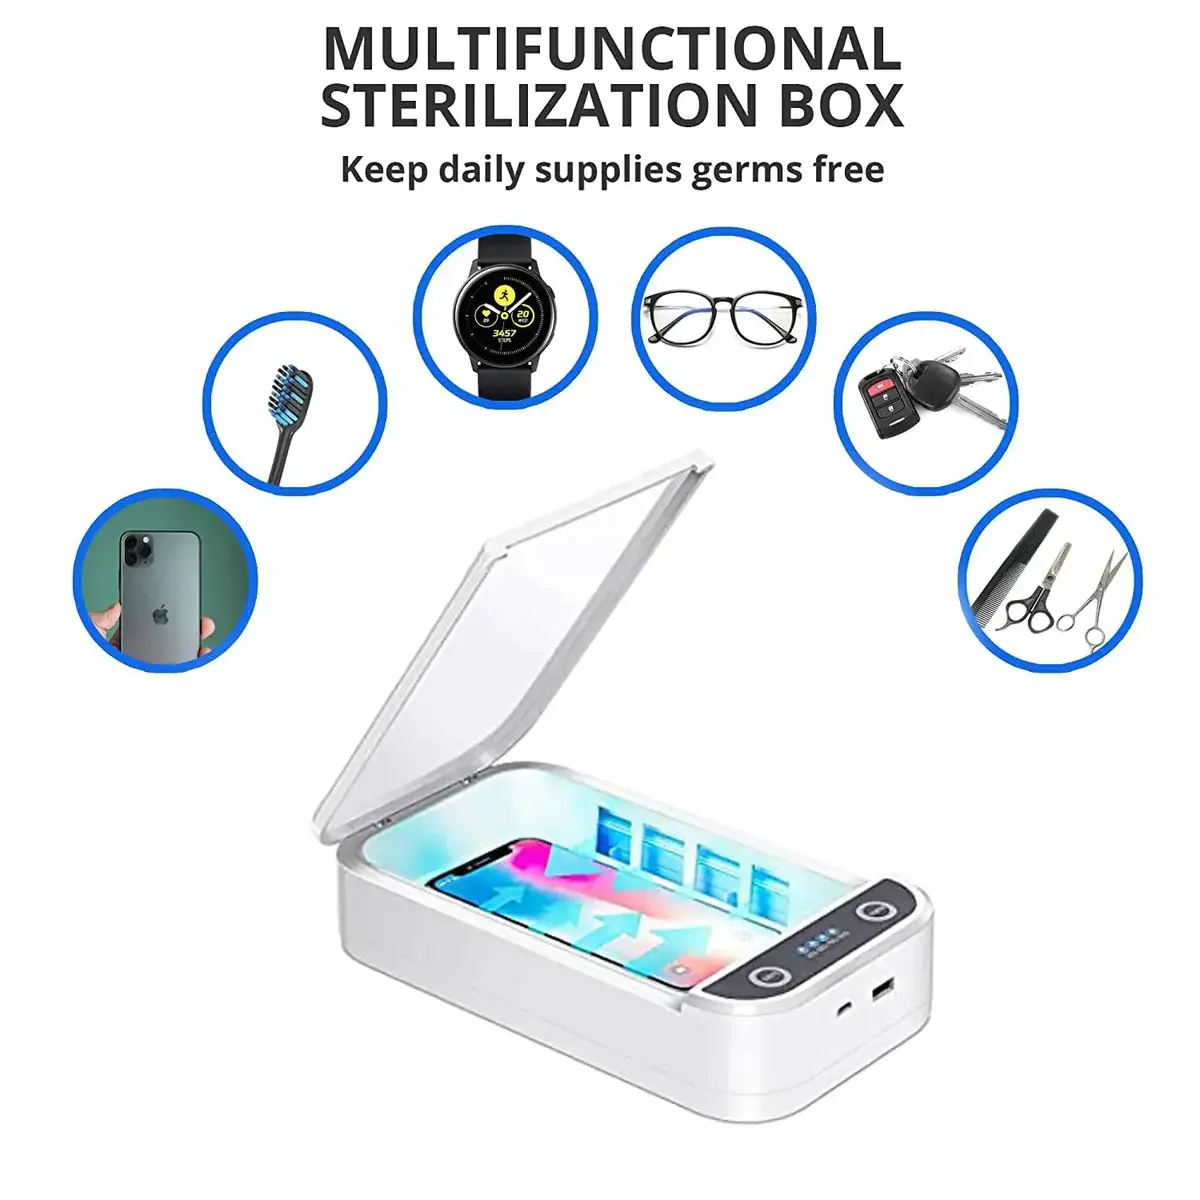 UV-Sterilizer-Box-Smartphone-Sanitizing-Machine-Portable-UV-Disinfector-for-iPhones-Android-Mobile-Phones-Keys-Cash-Credit-Card-Sanitizer-Smiledrive-1650440446_1200x1200